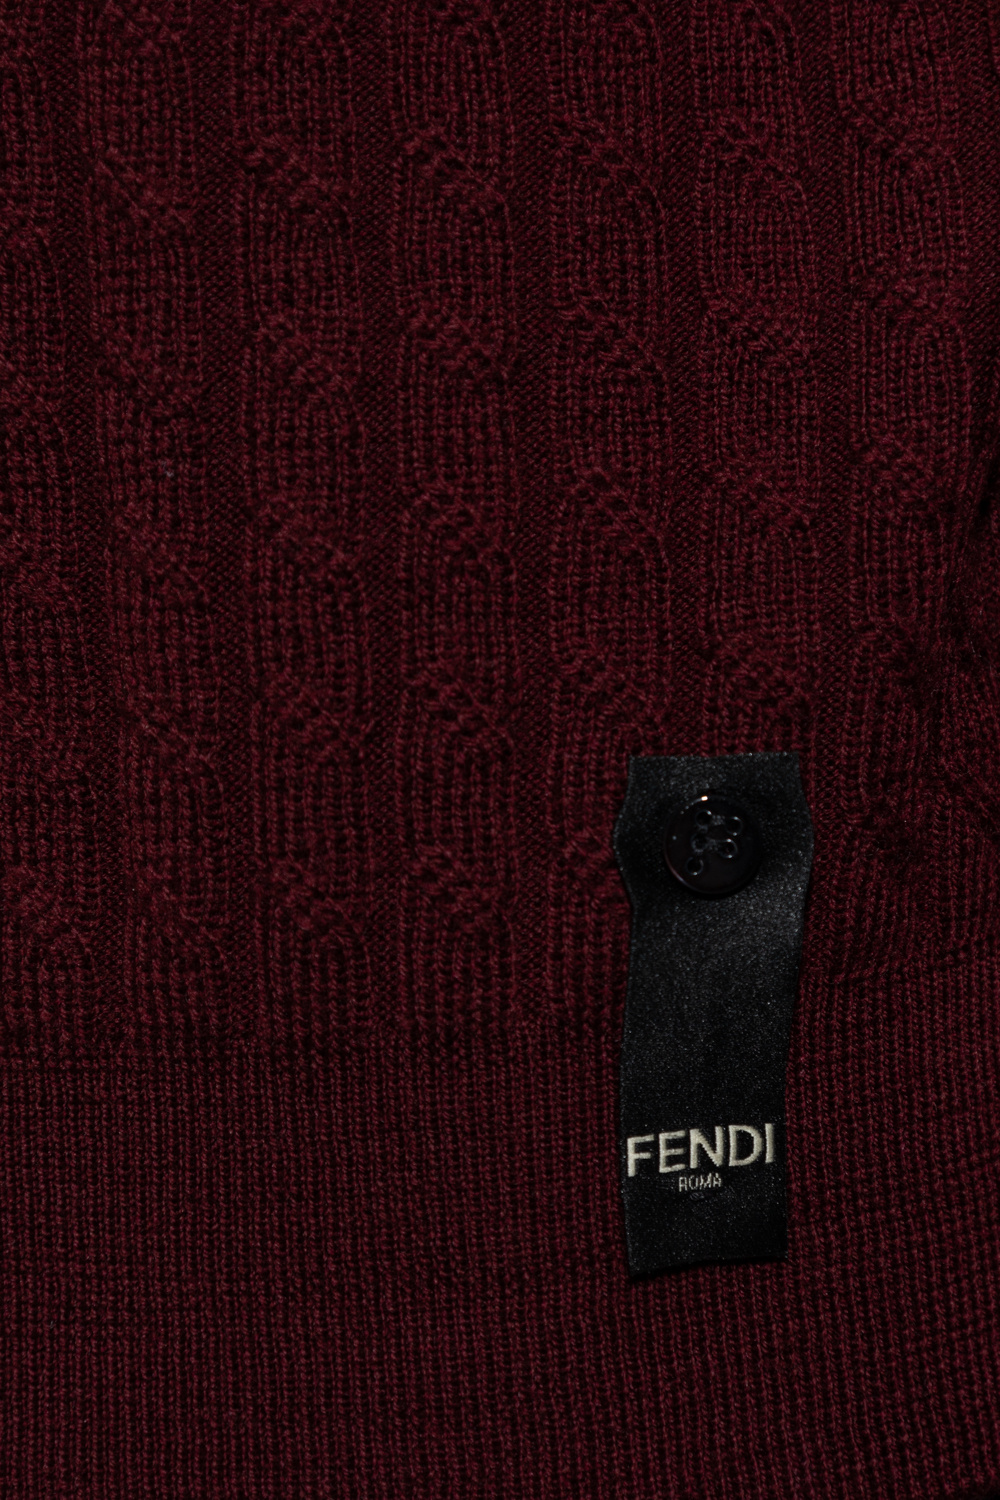 Fendi over Wool sweater